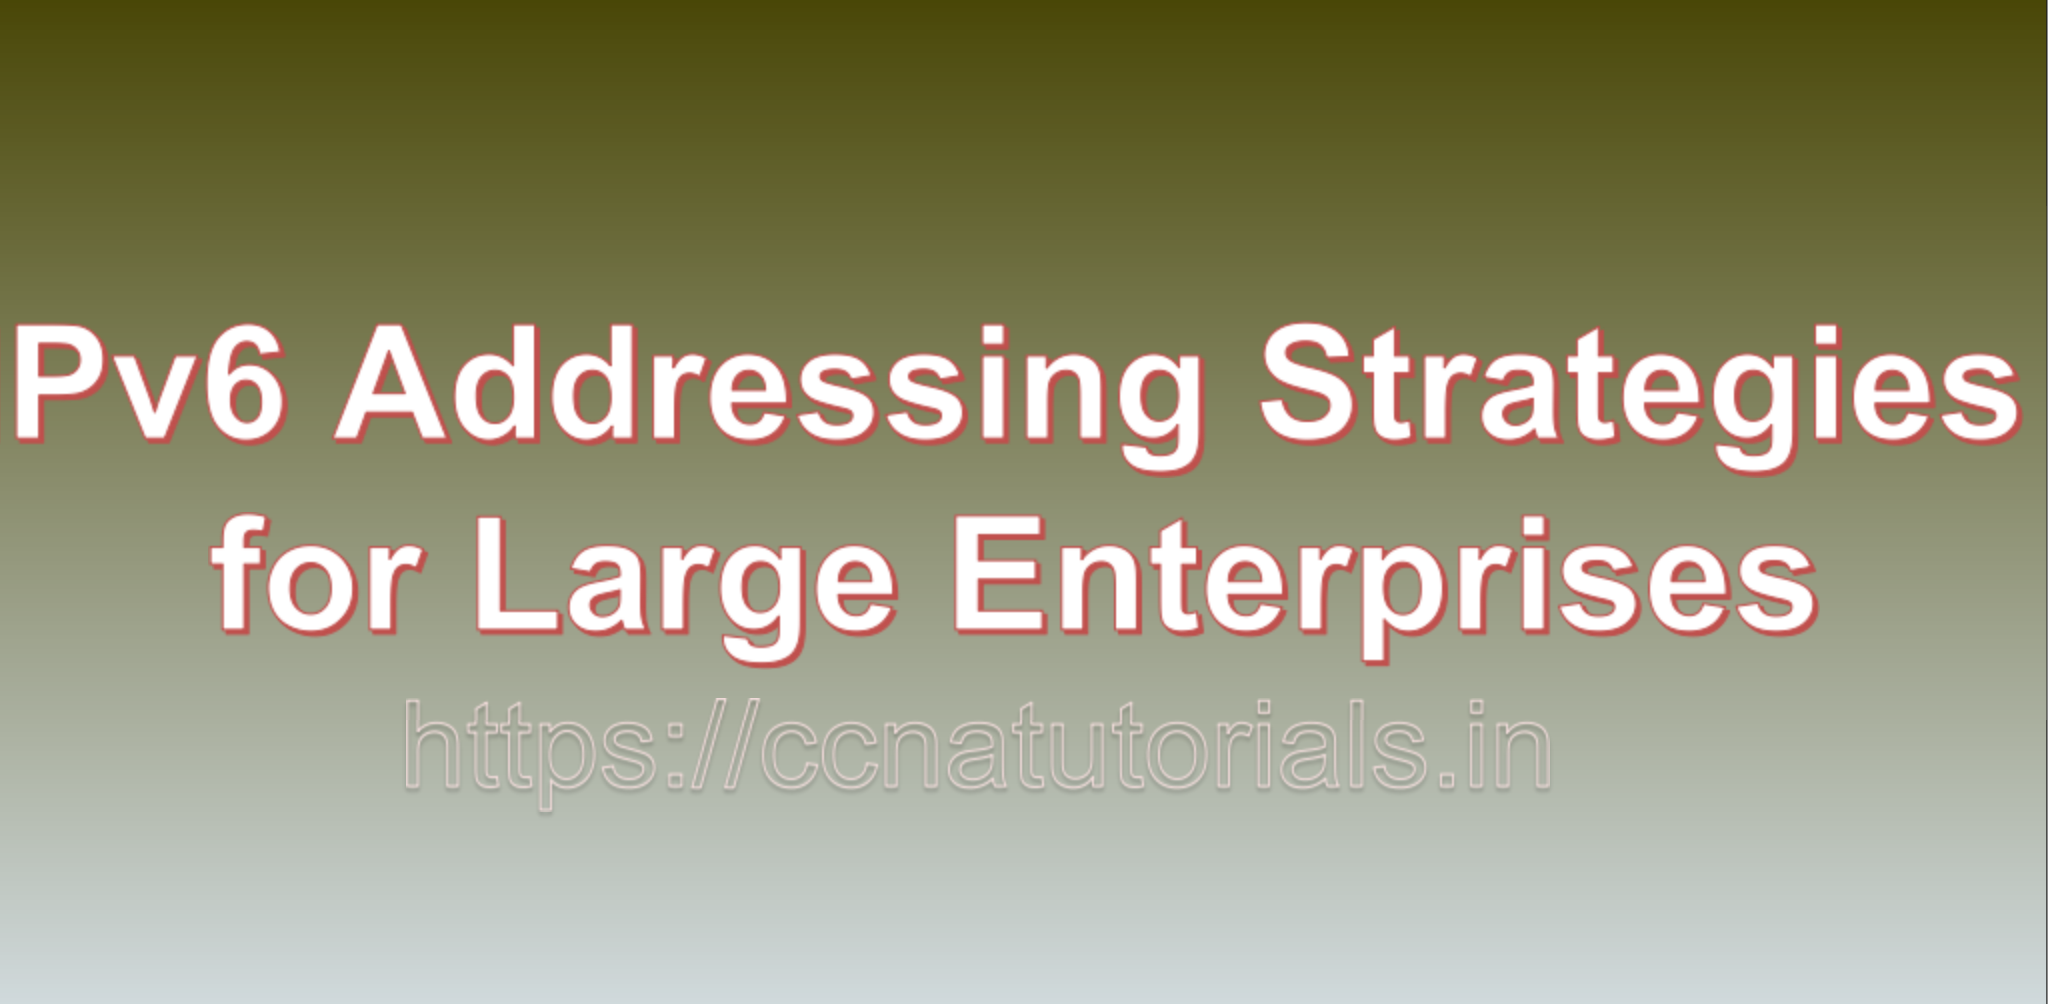 IPv6 Addressing Strategies for Large Enterprises, ccna, ccna tutorials